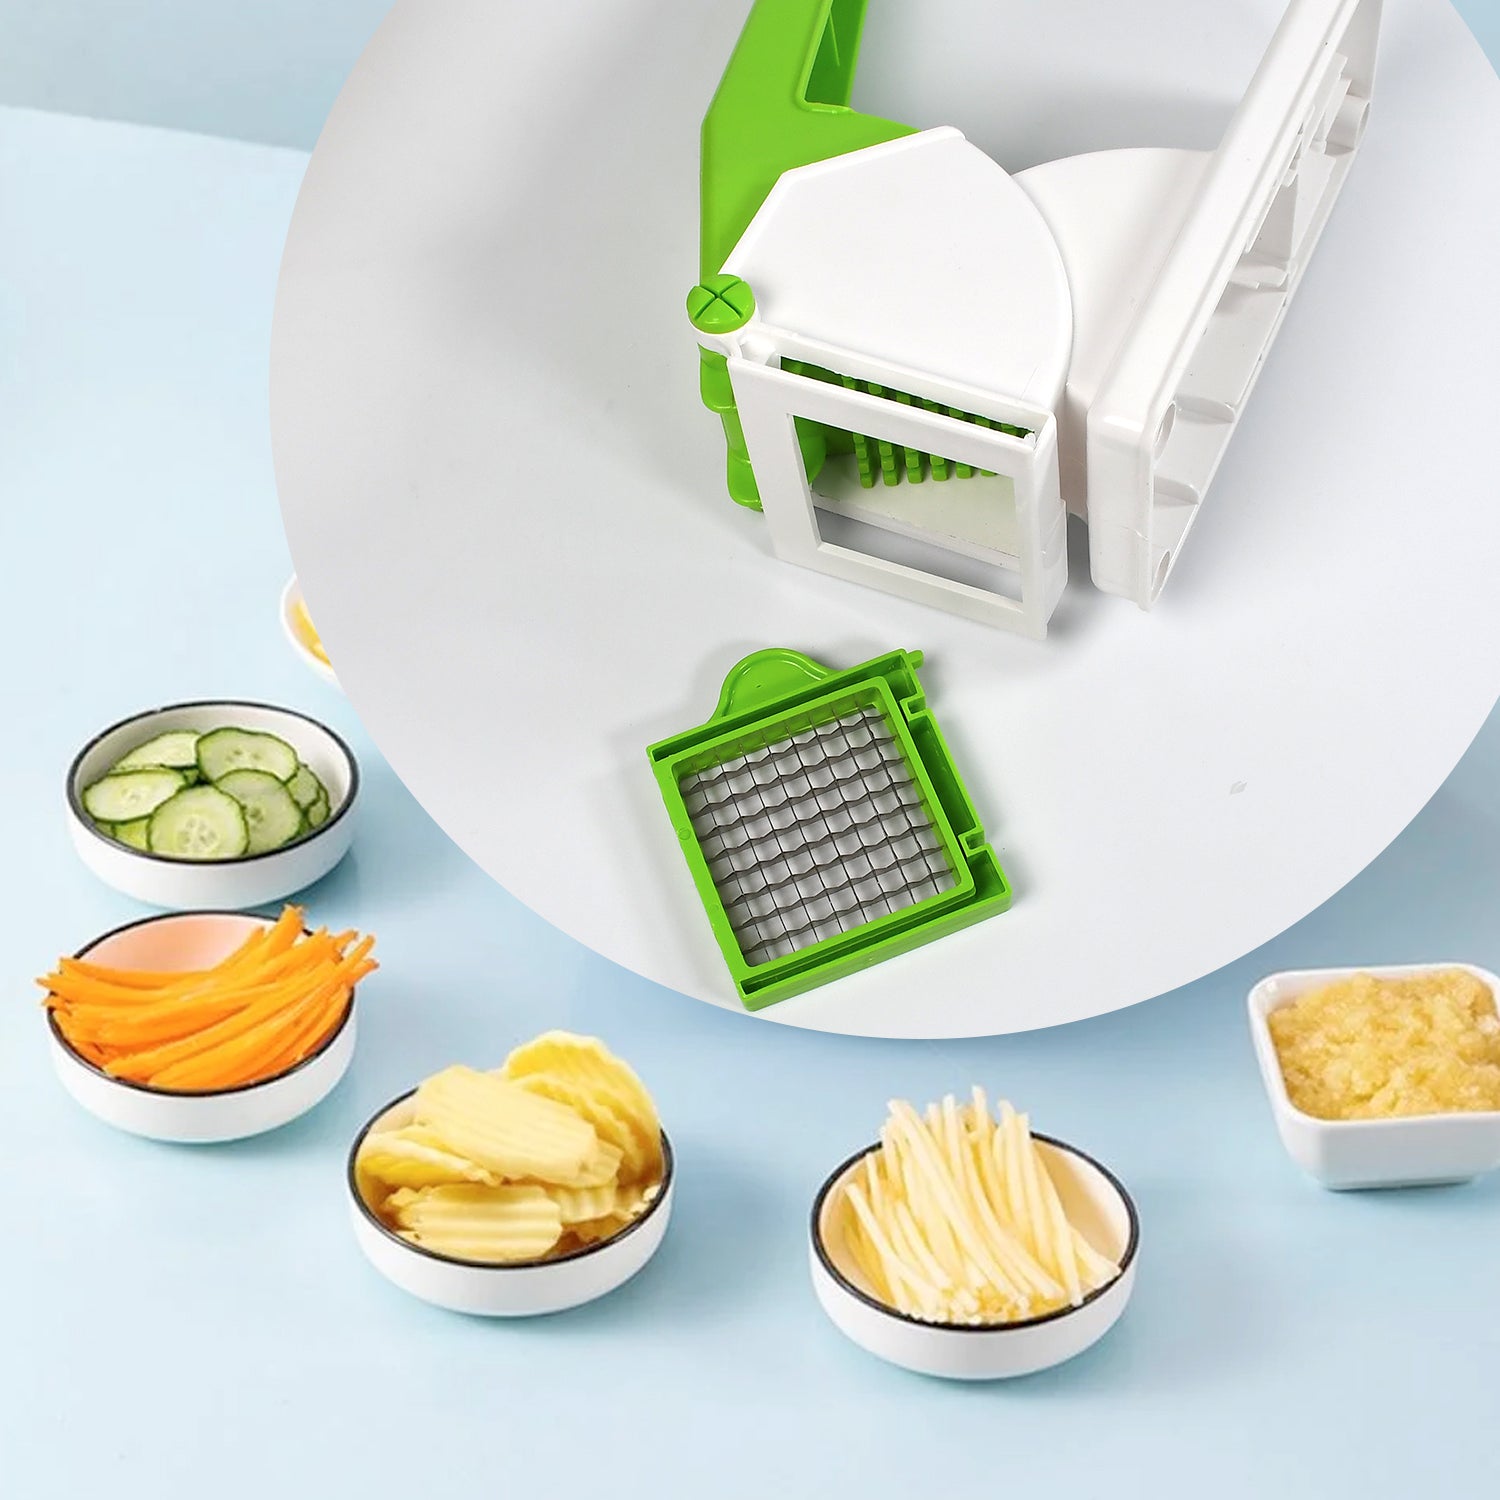 5337 French Fries Chips Maker Machine | Snacks Cutter/Chipser | Vegetable Slicer/Chopper | Kitchen Gadgets | Kitchen Tool & Accessories DeoDap